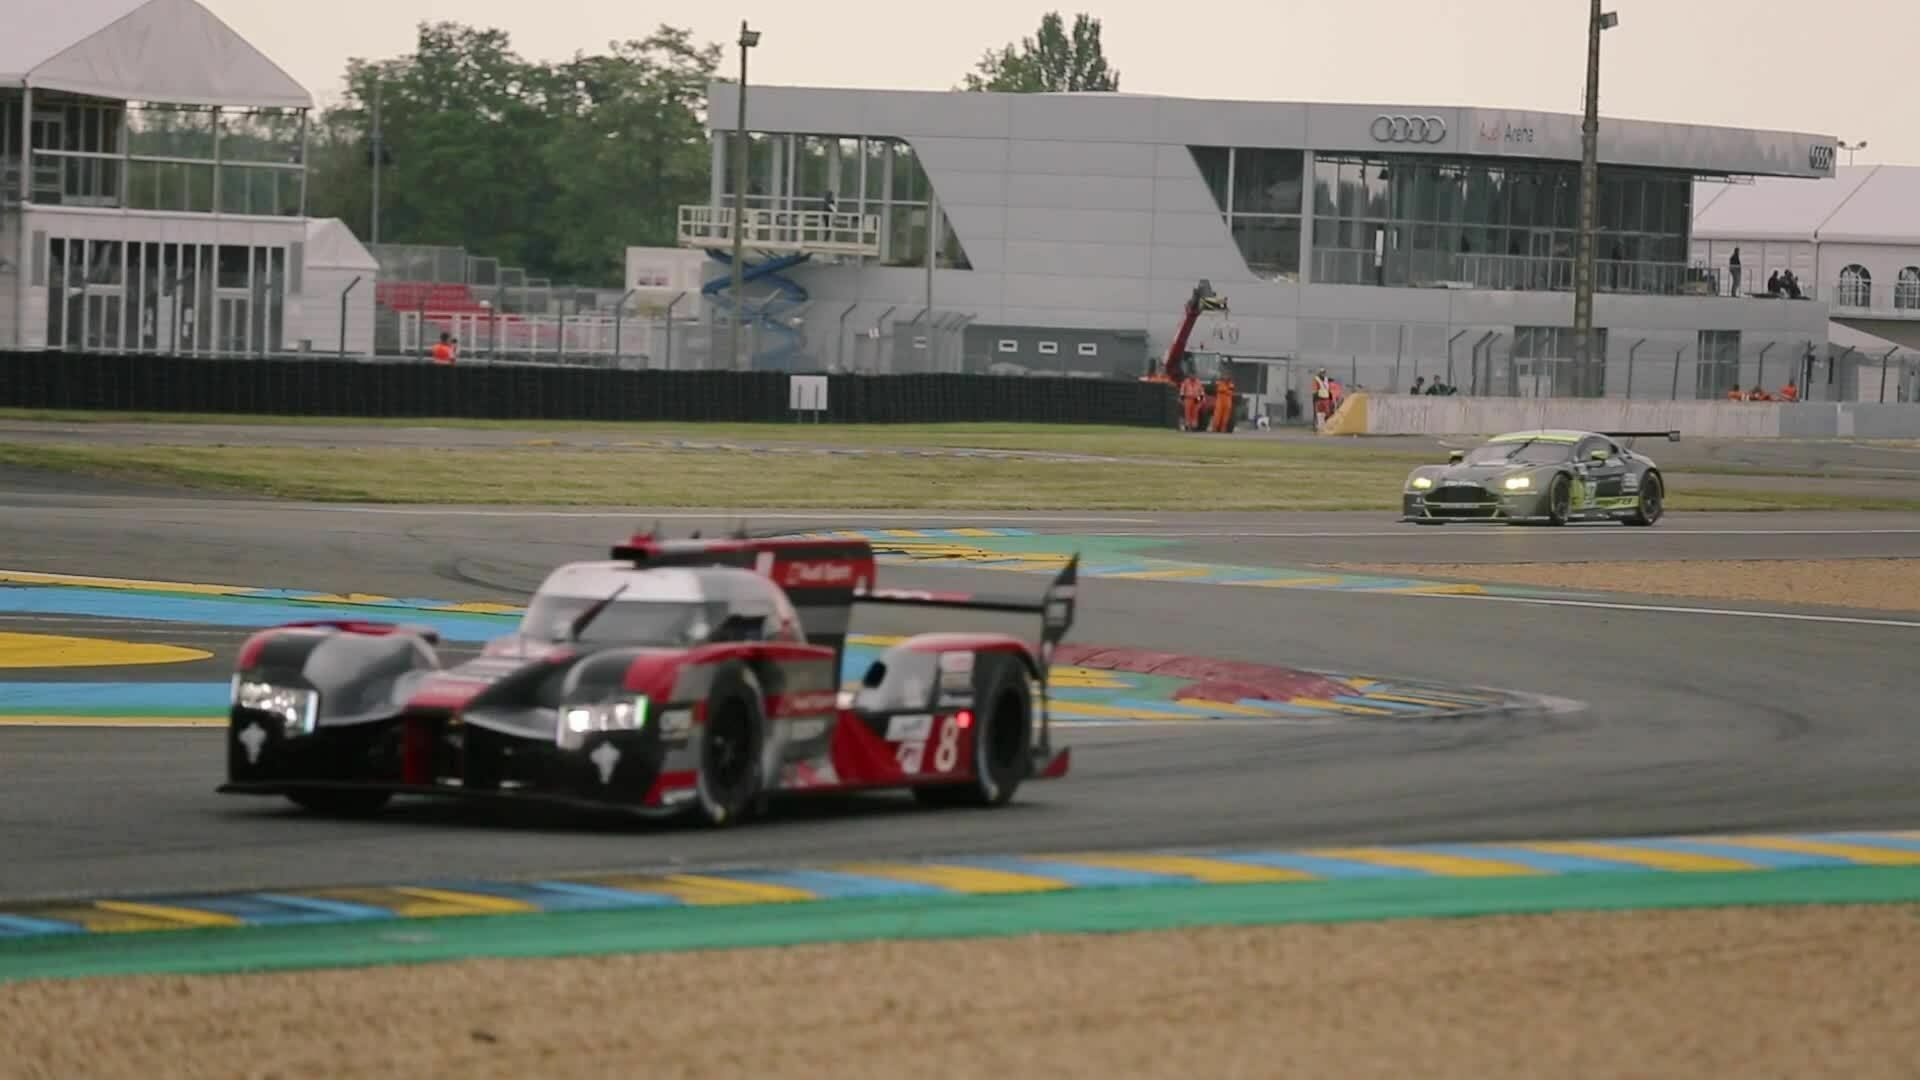 Valuable test kilometers for Audi at Le Mans